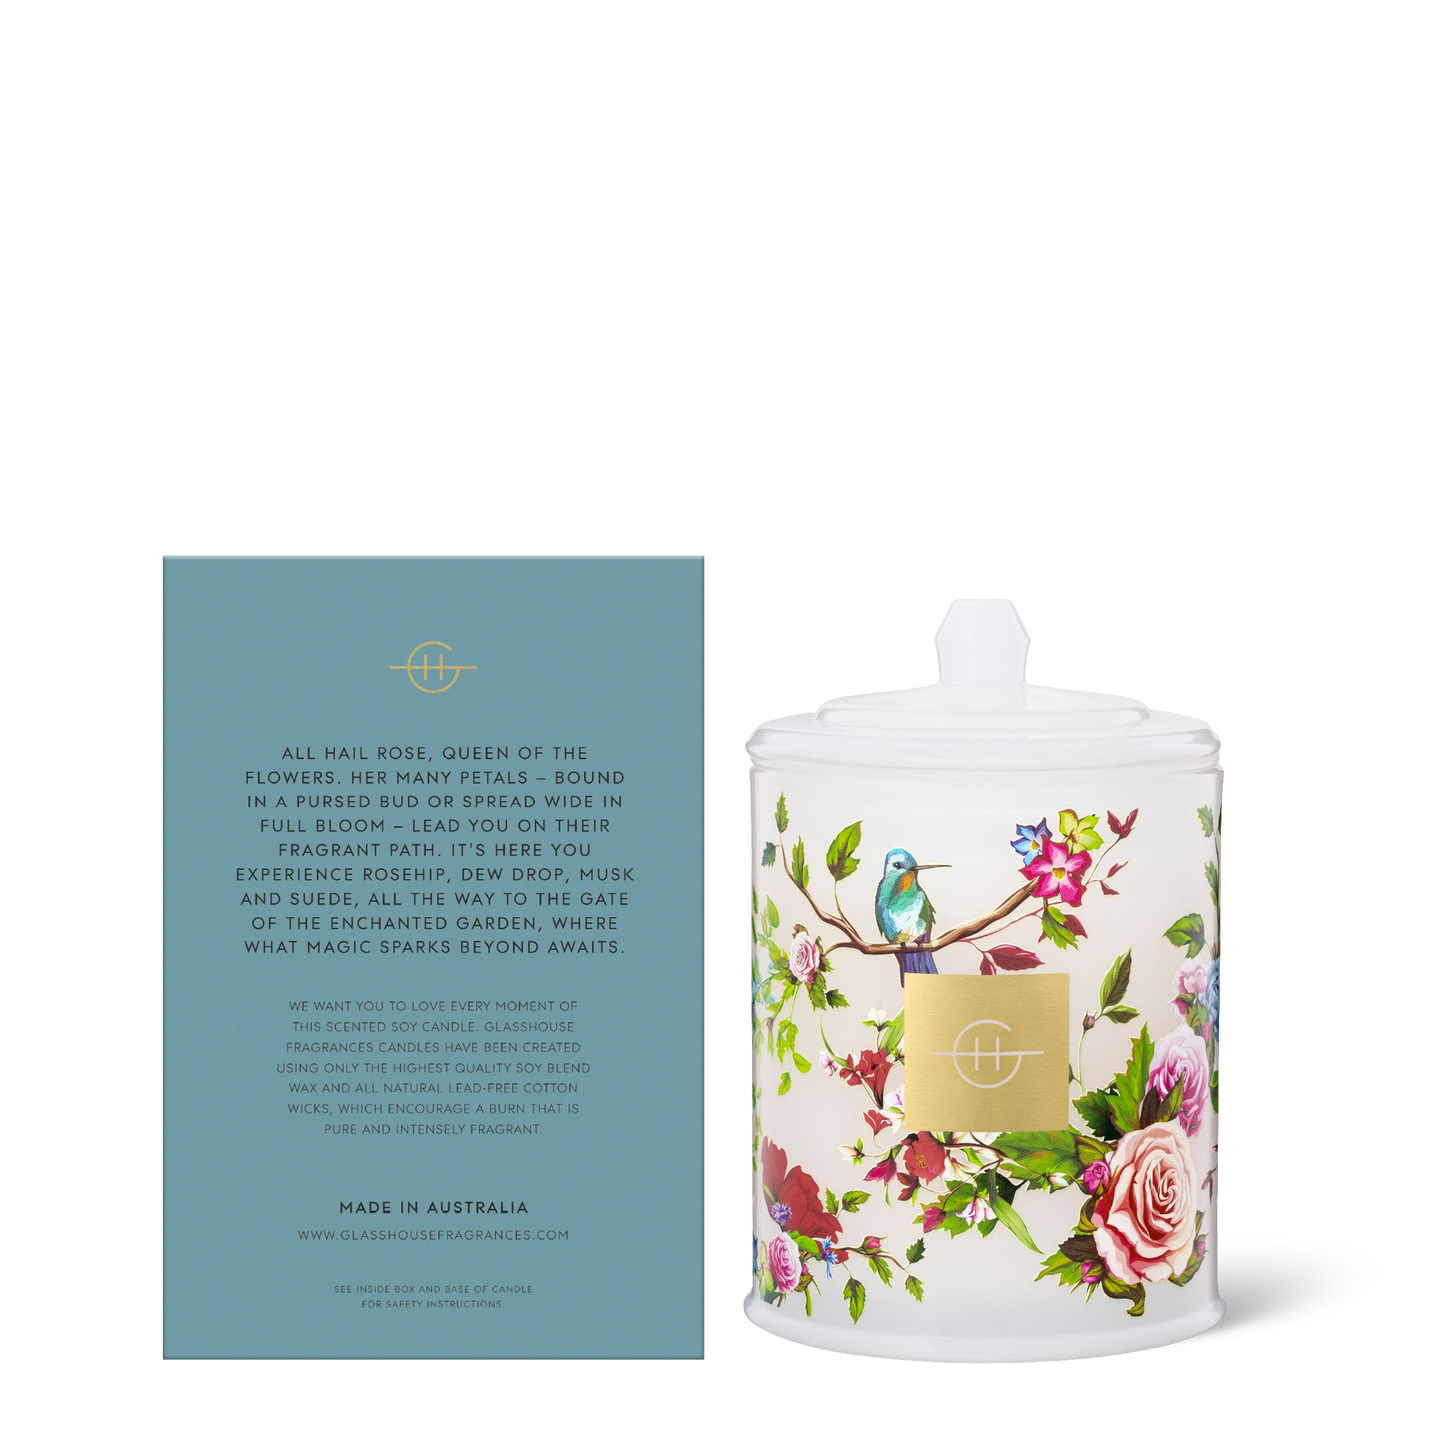 Enchanted Garden Limited Edition 380g Candle - Glasshouse Fragrances